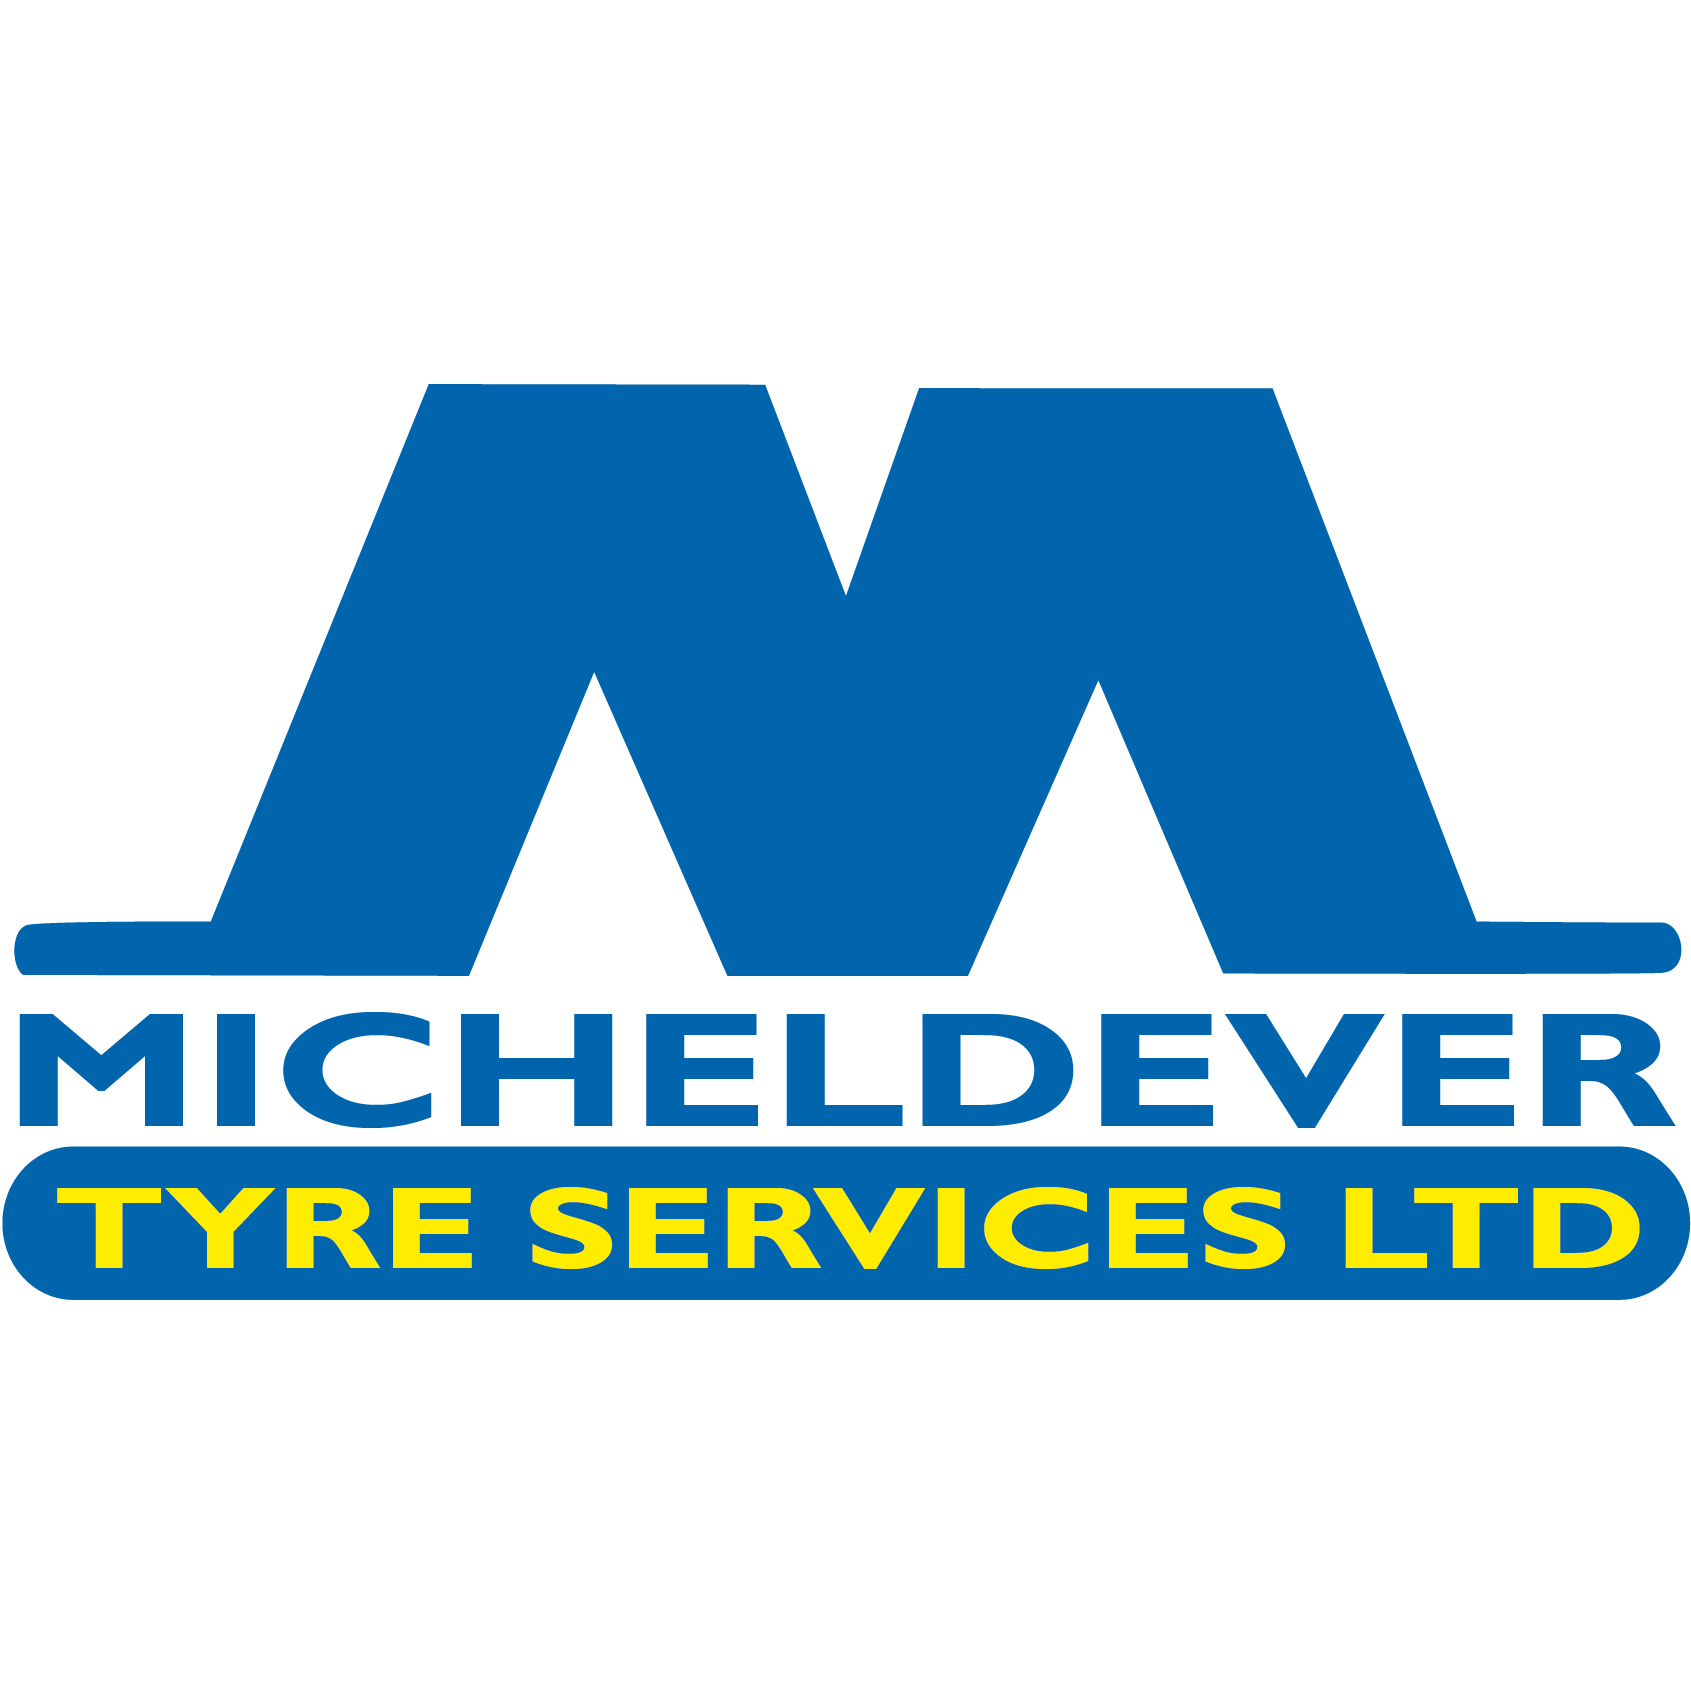 Micheldever Tyre Services Ltd